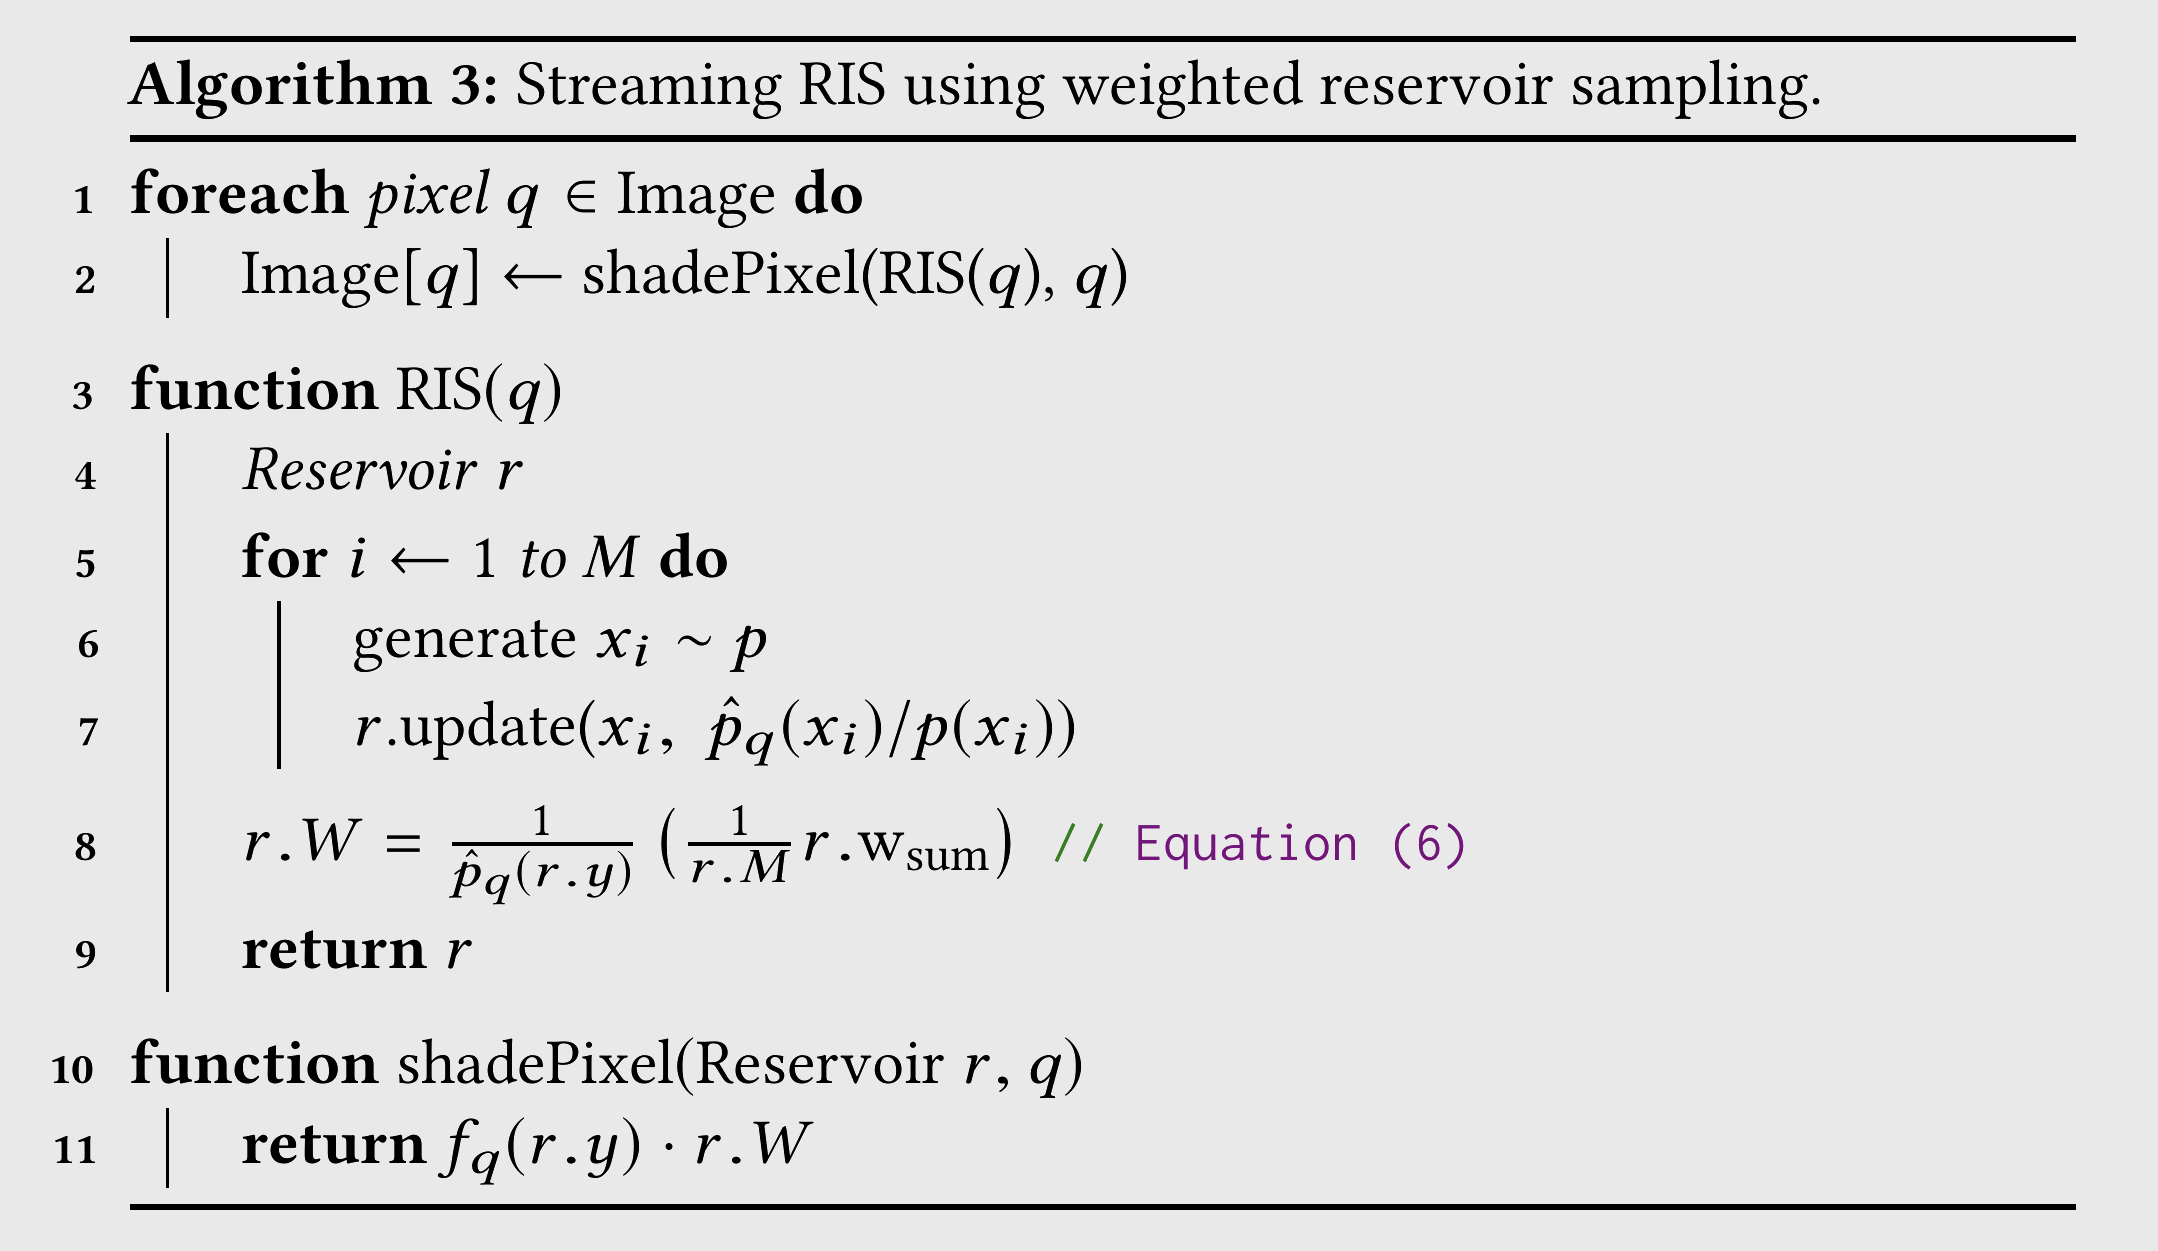 Pseudocode for stream RIS